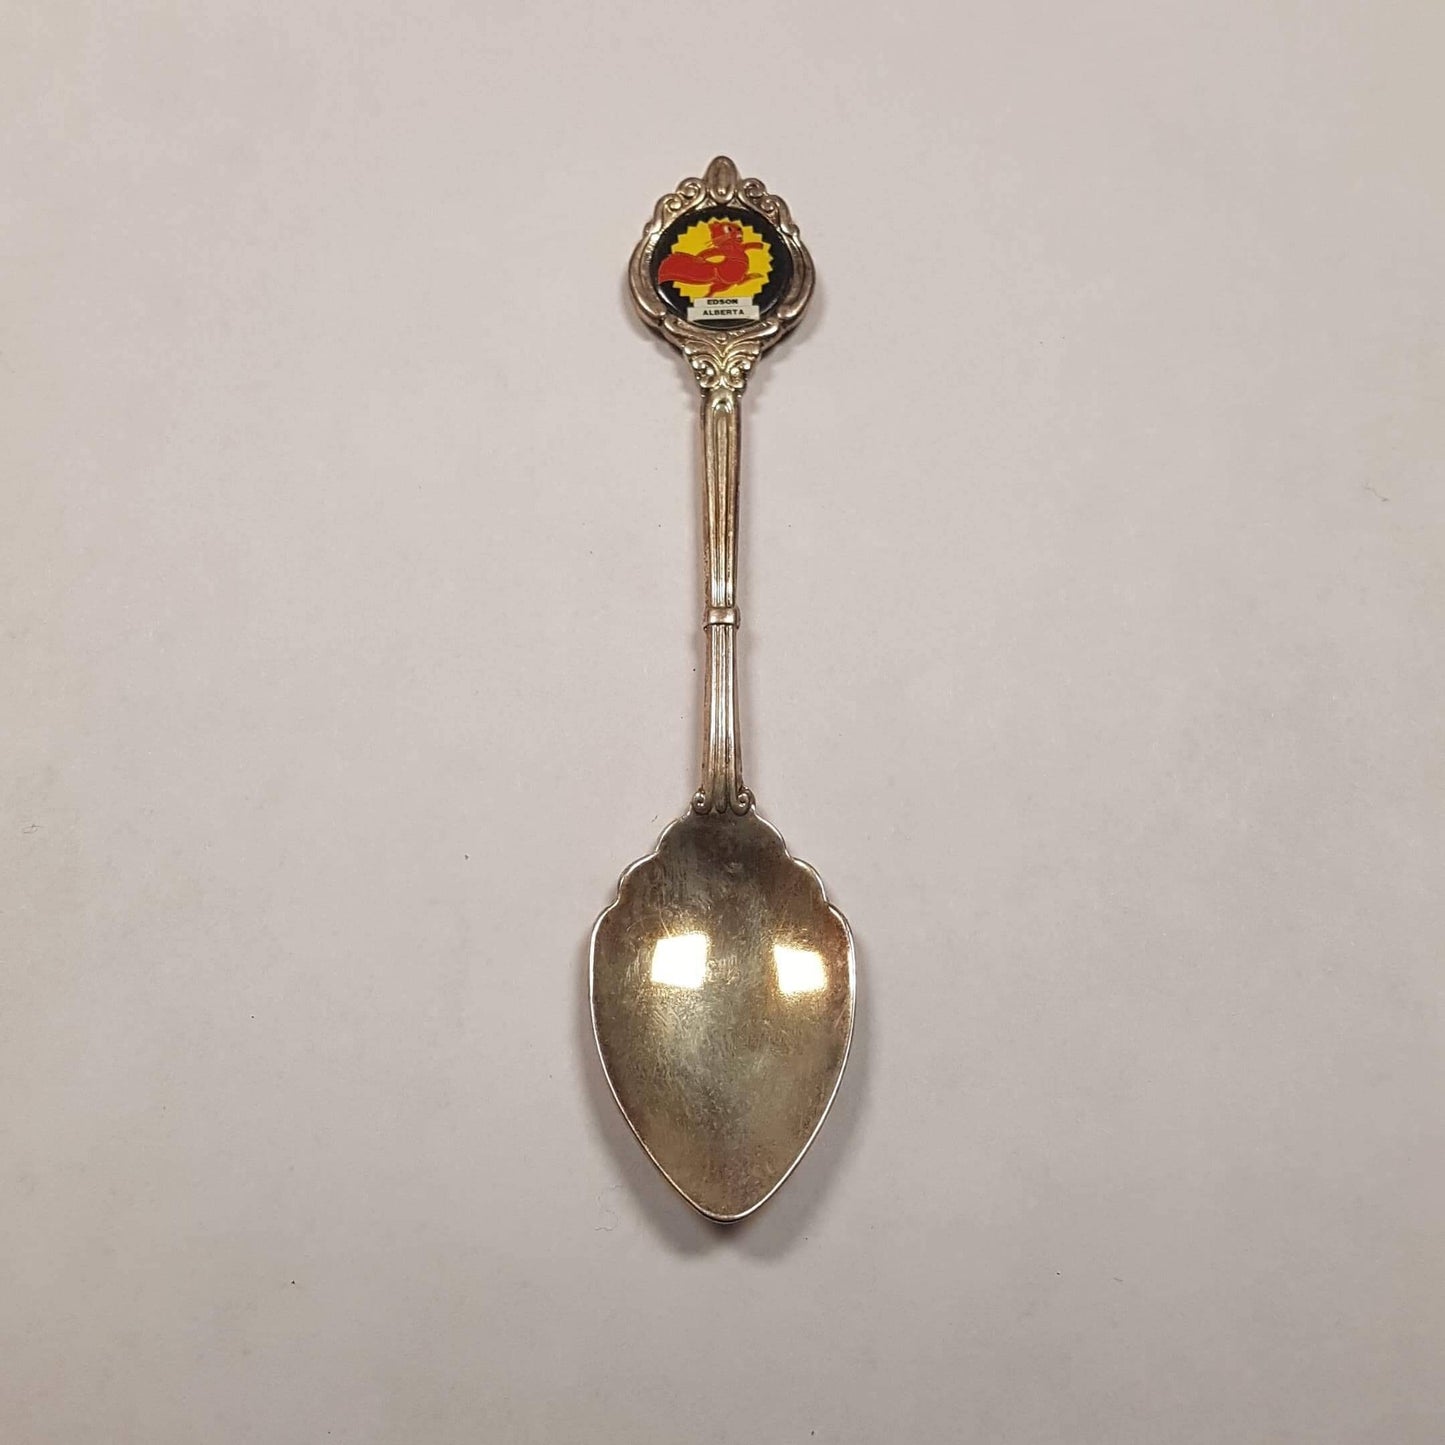 edson alberta gift spoon collectible souvenir travel item